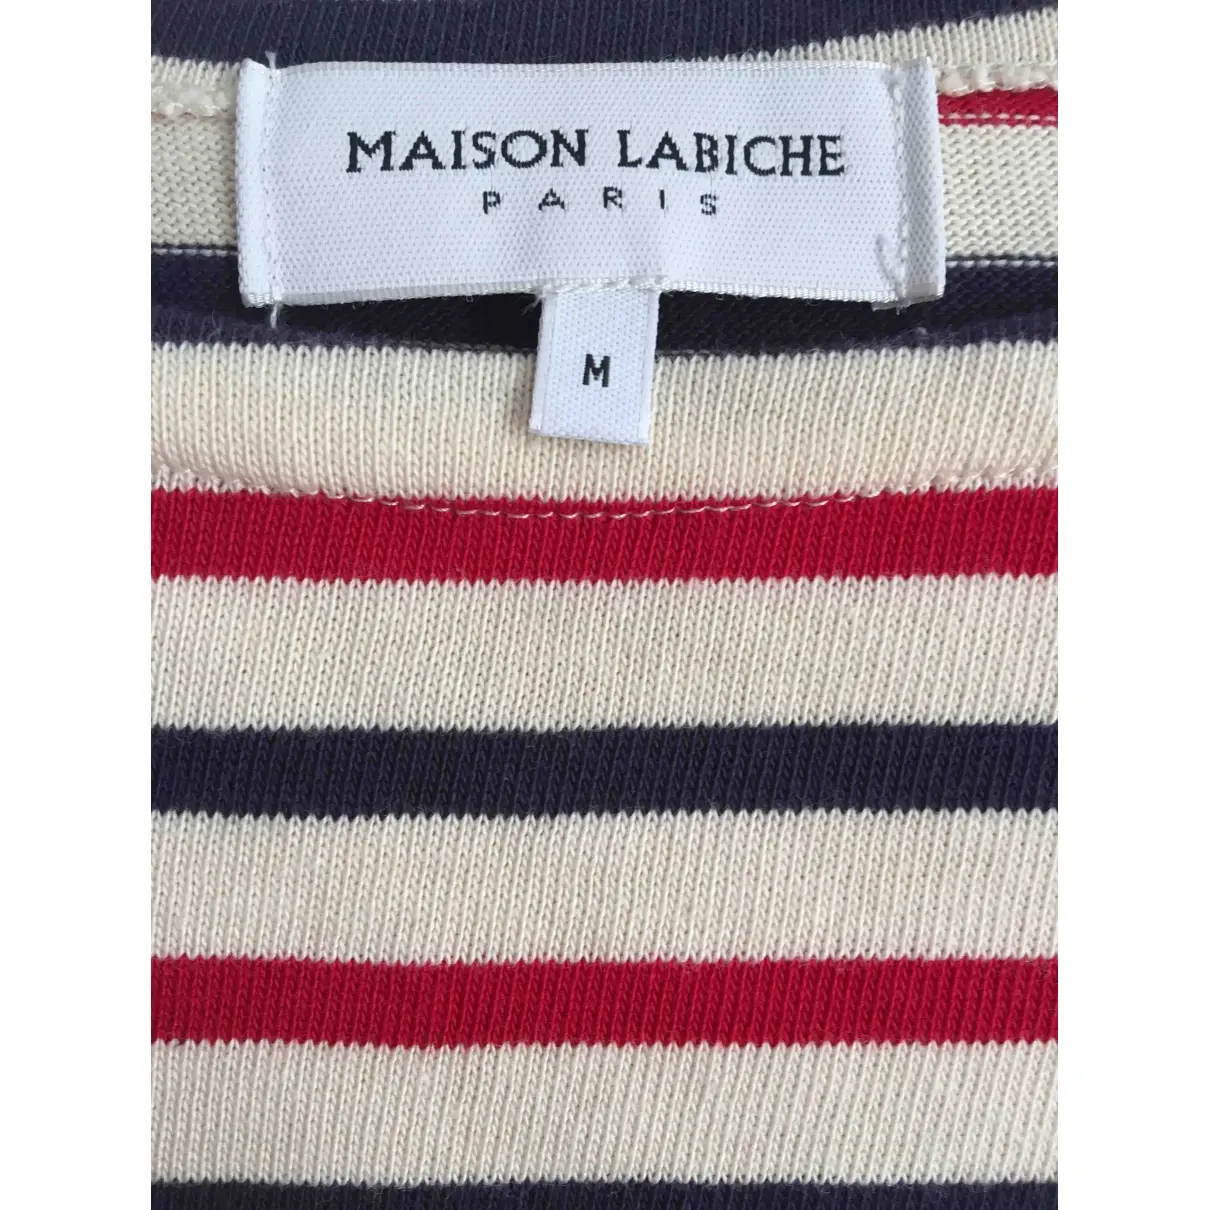 Buy Maison Labiche Jumper online